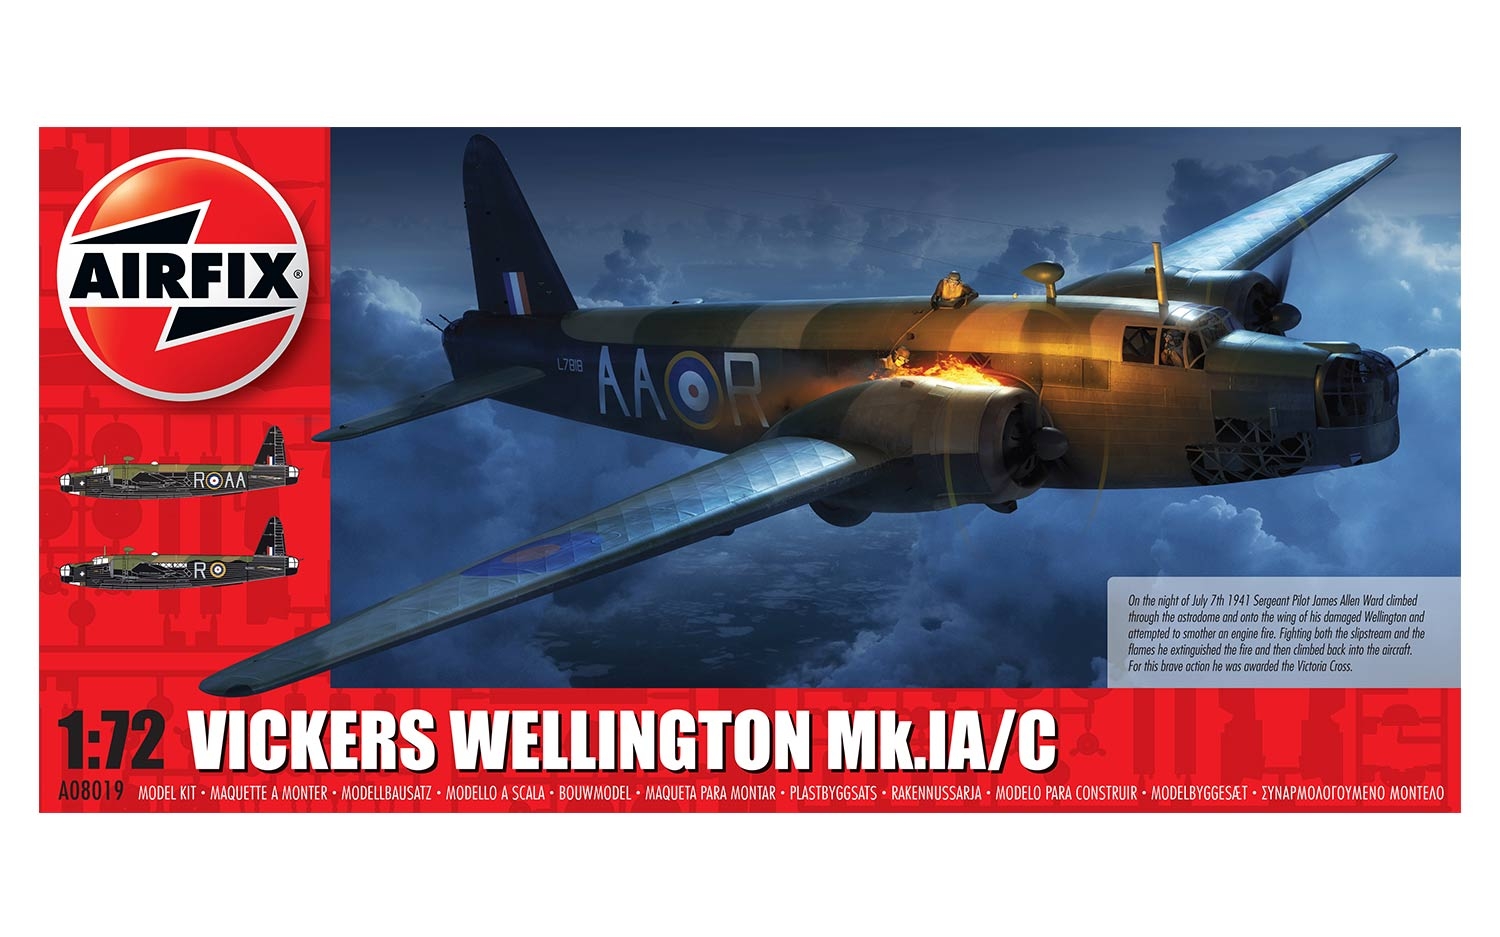 Vickers Wellington Mk.1A/C